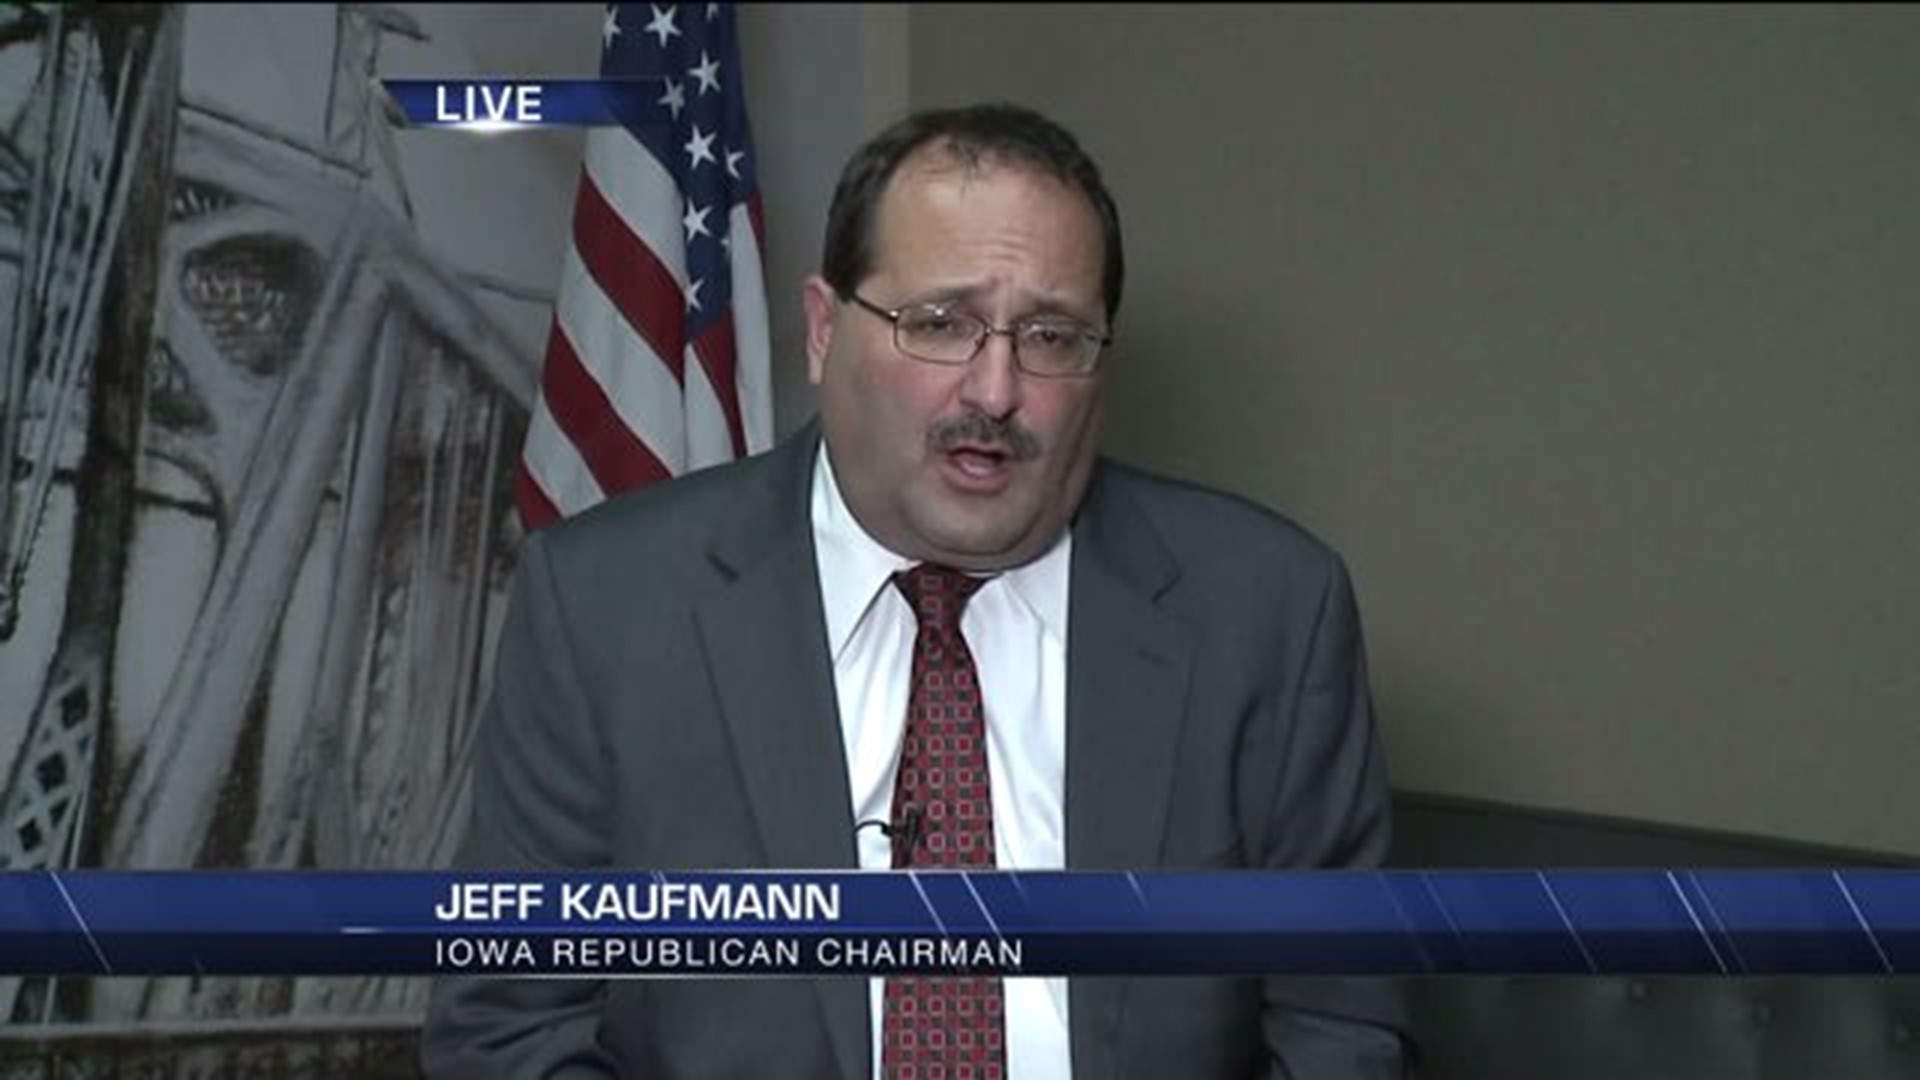 Iowa GOP Chairman Sees State Turning Redder